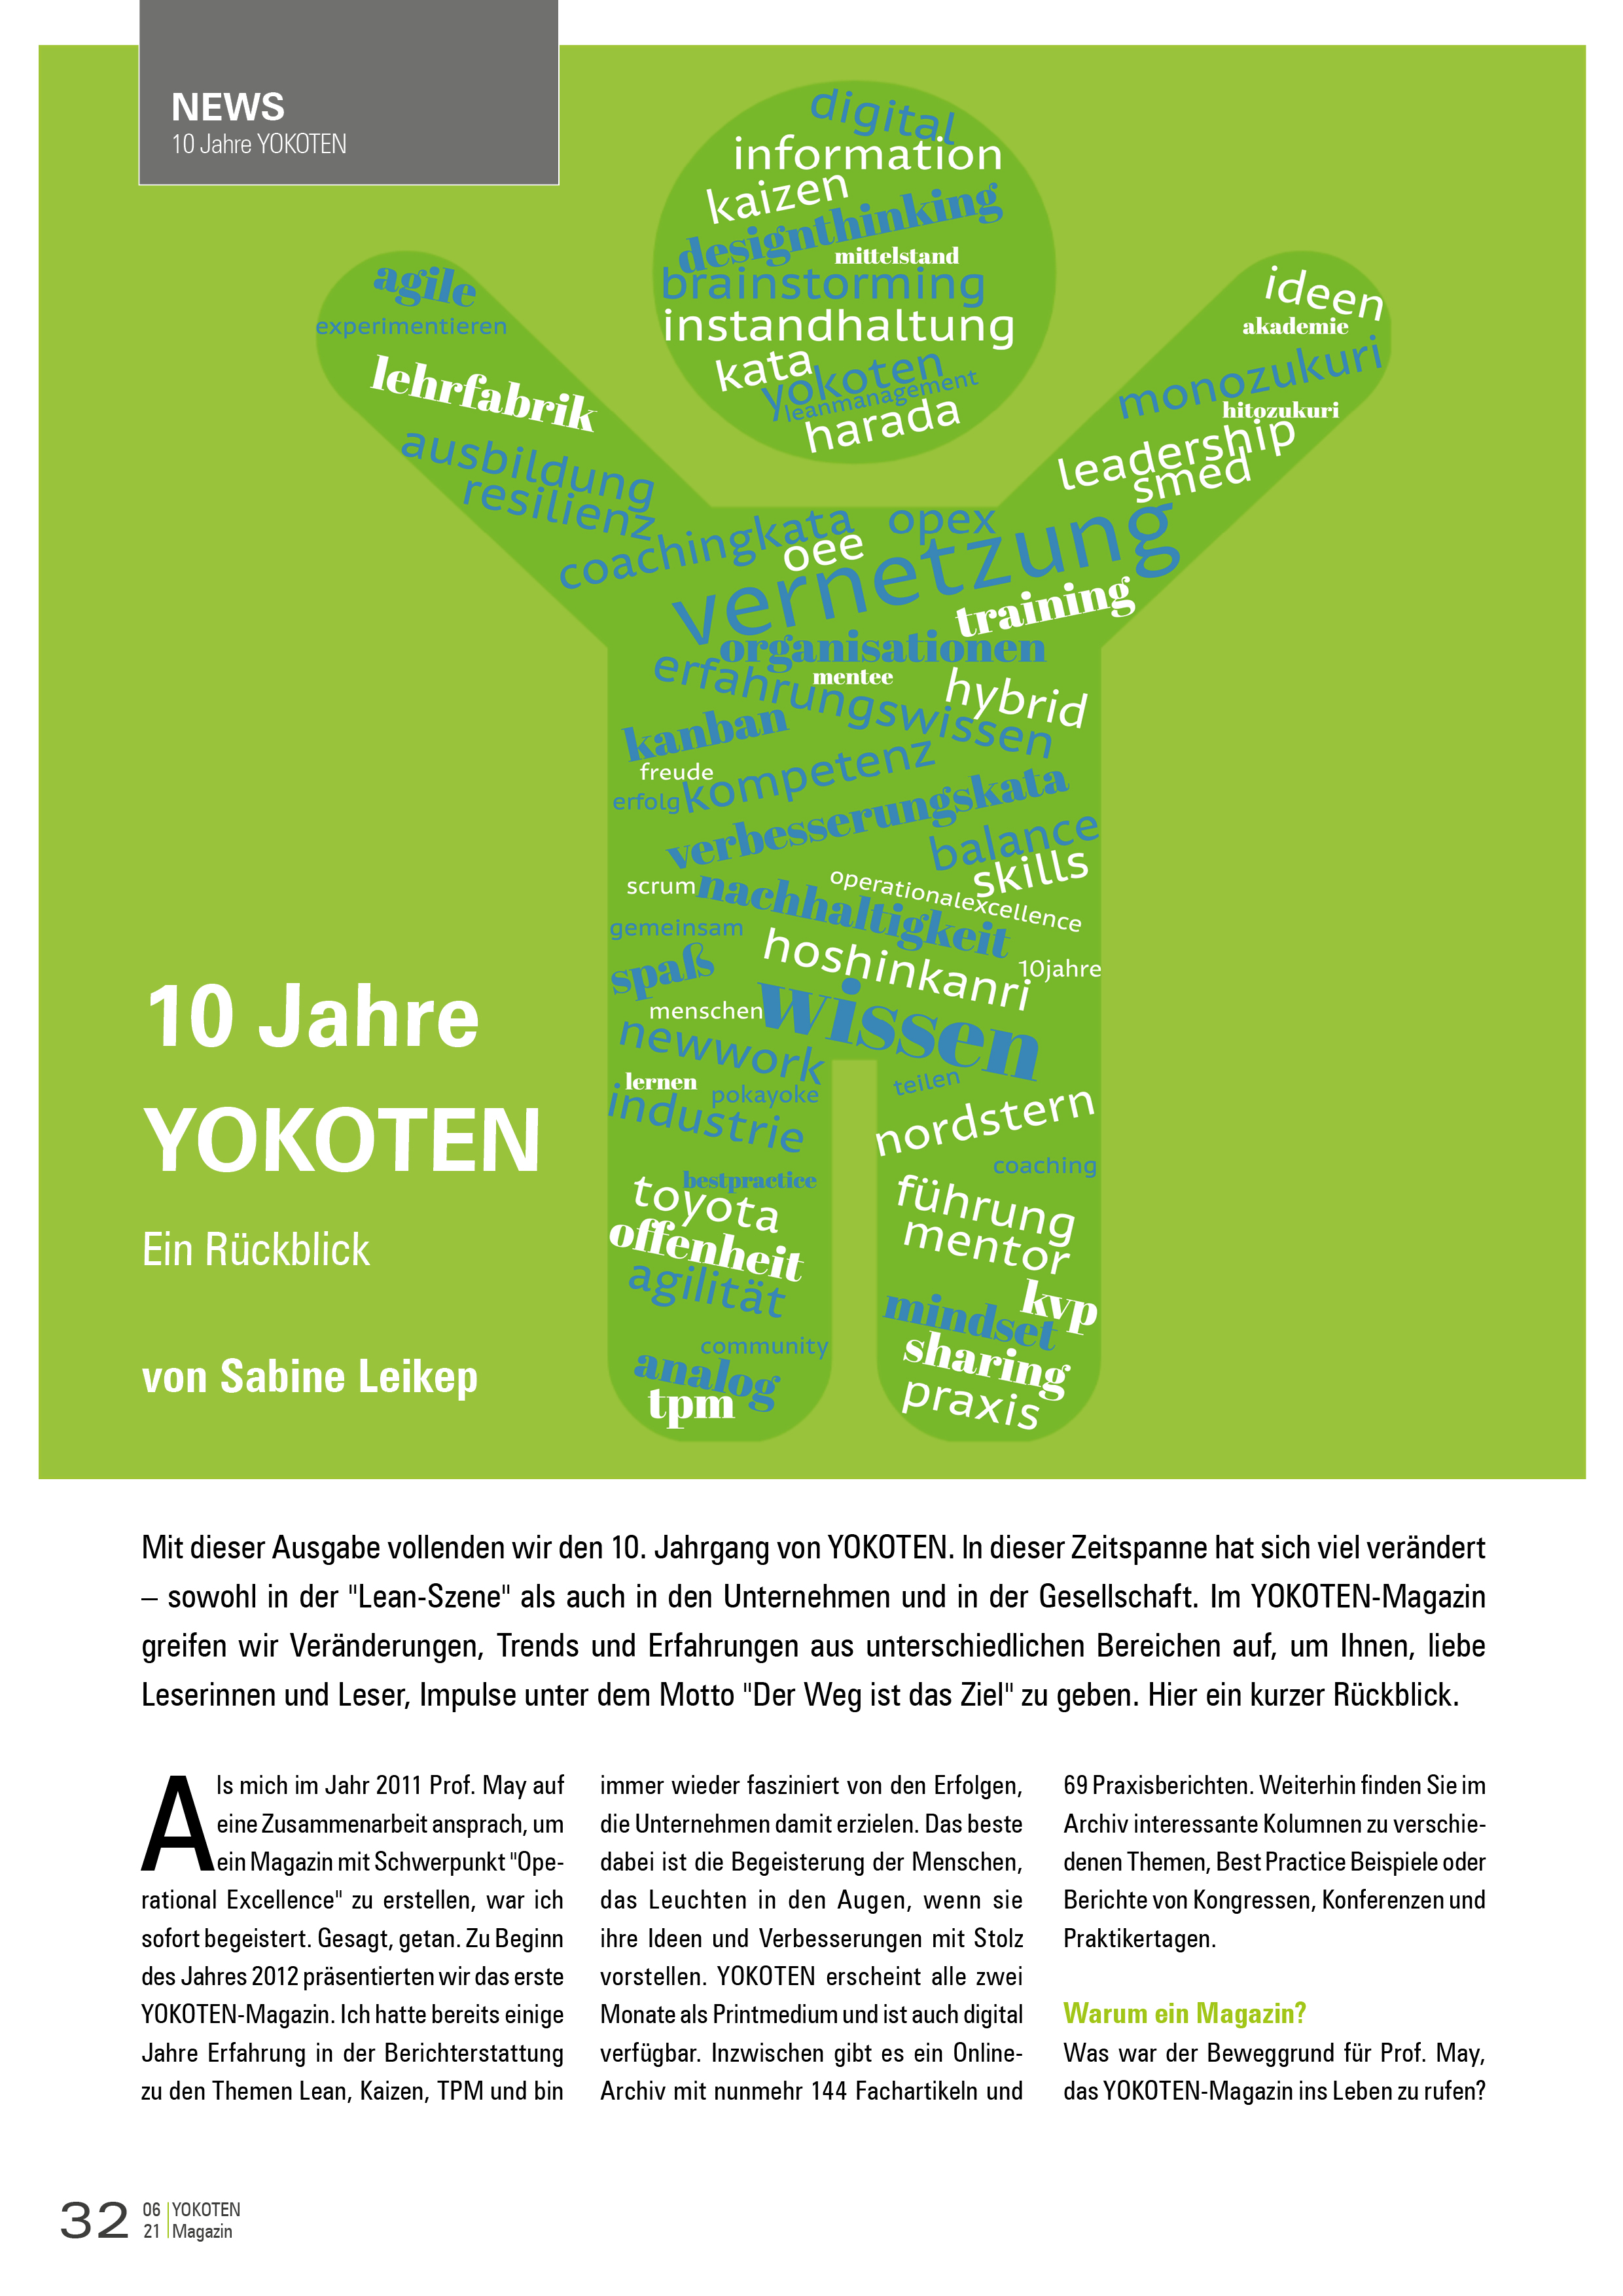 YOKOTEN-Artikel: 10 Jahre YOKOTEN